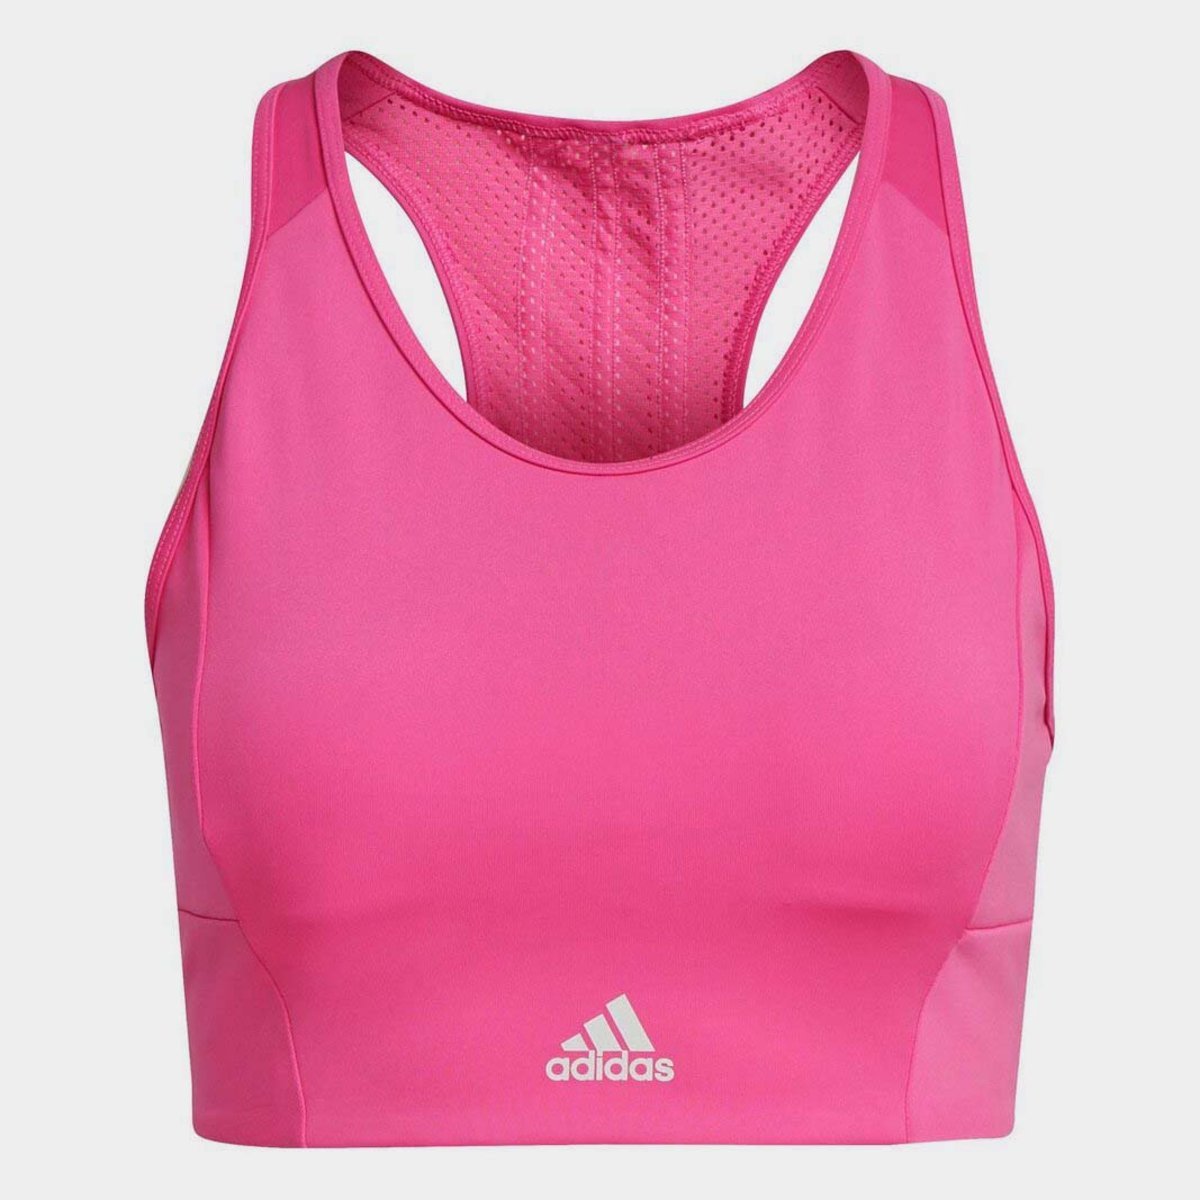 adidas Training aeroknit logo light support sports bra in bright pink